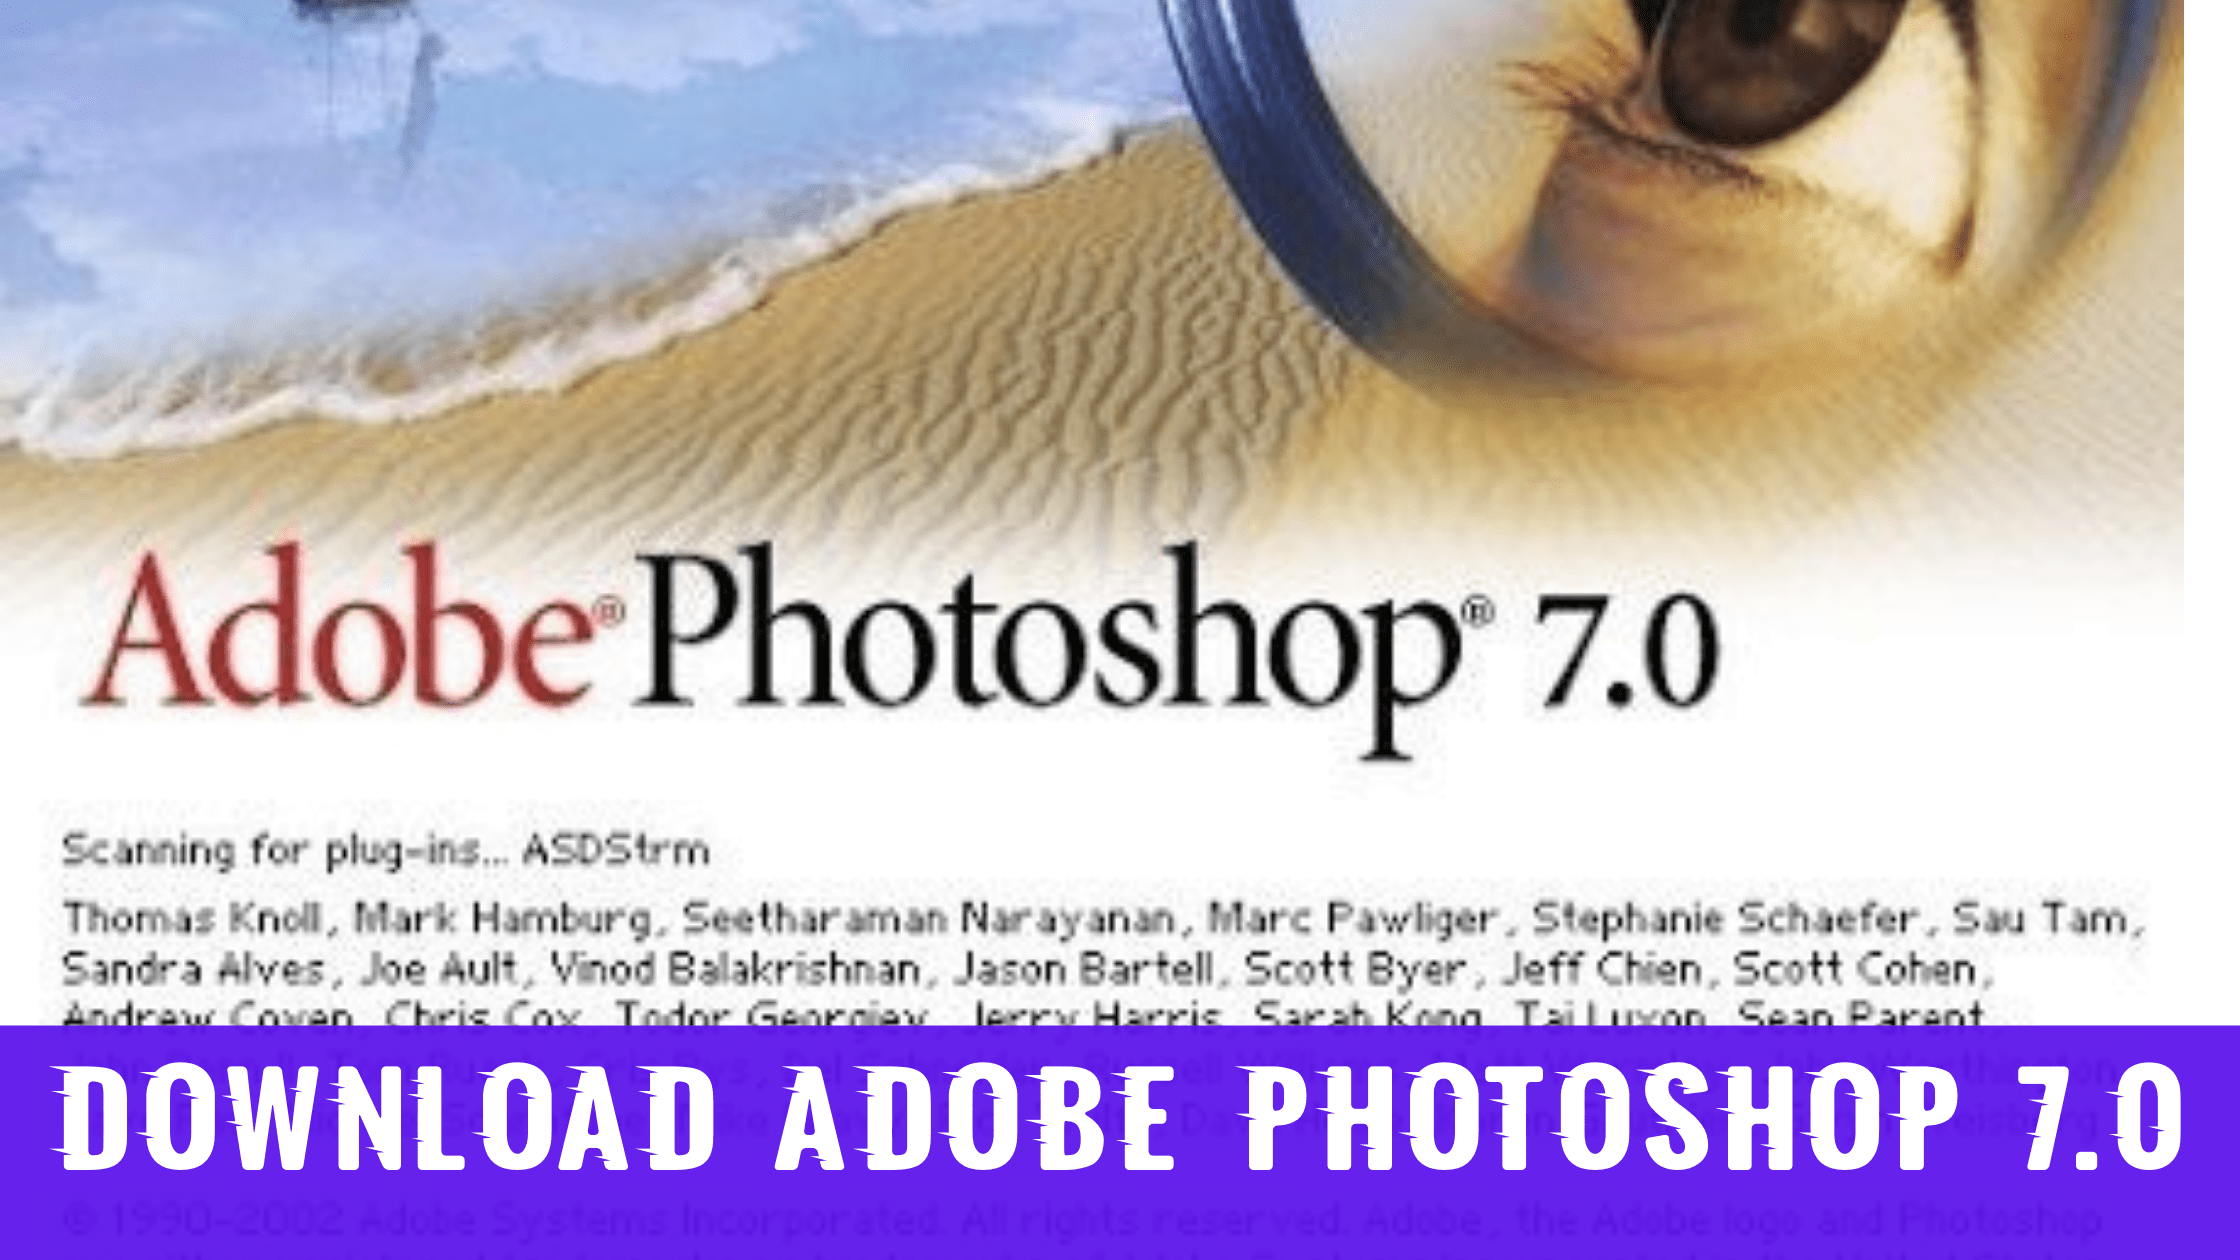 Adobe photoshop 7.0 free download for windows 7 full version garrys mod download windows 10 free